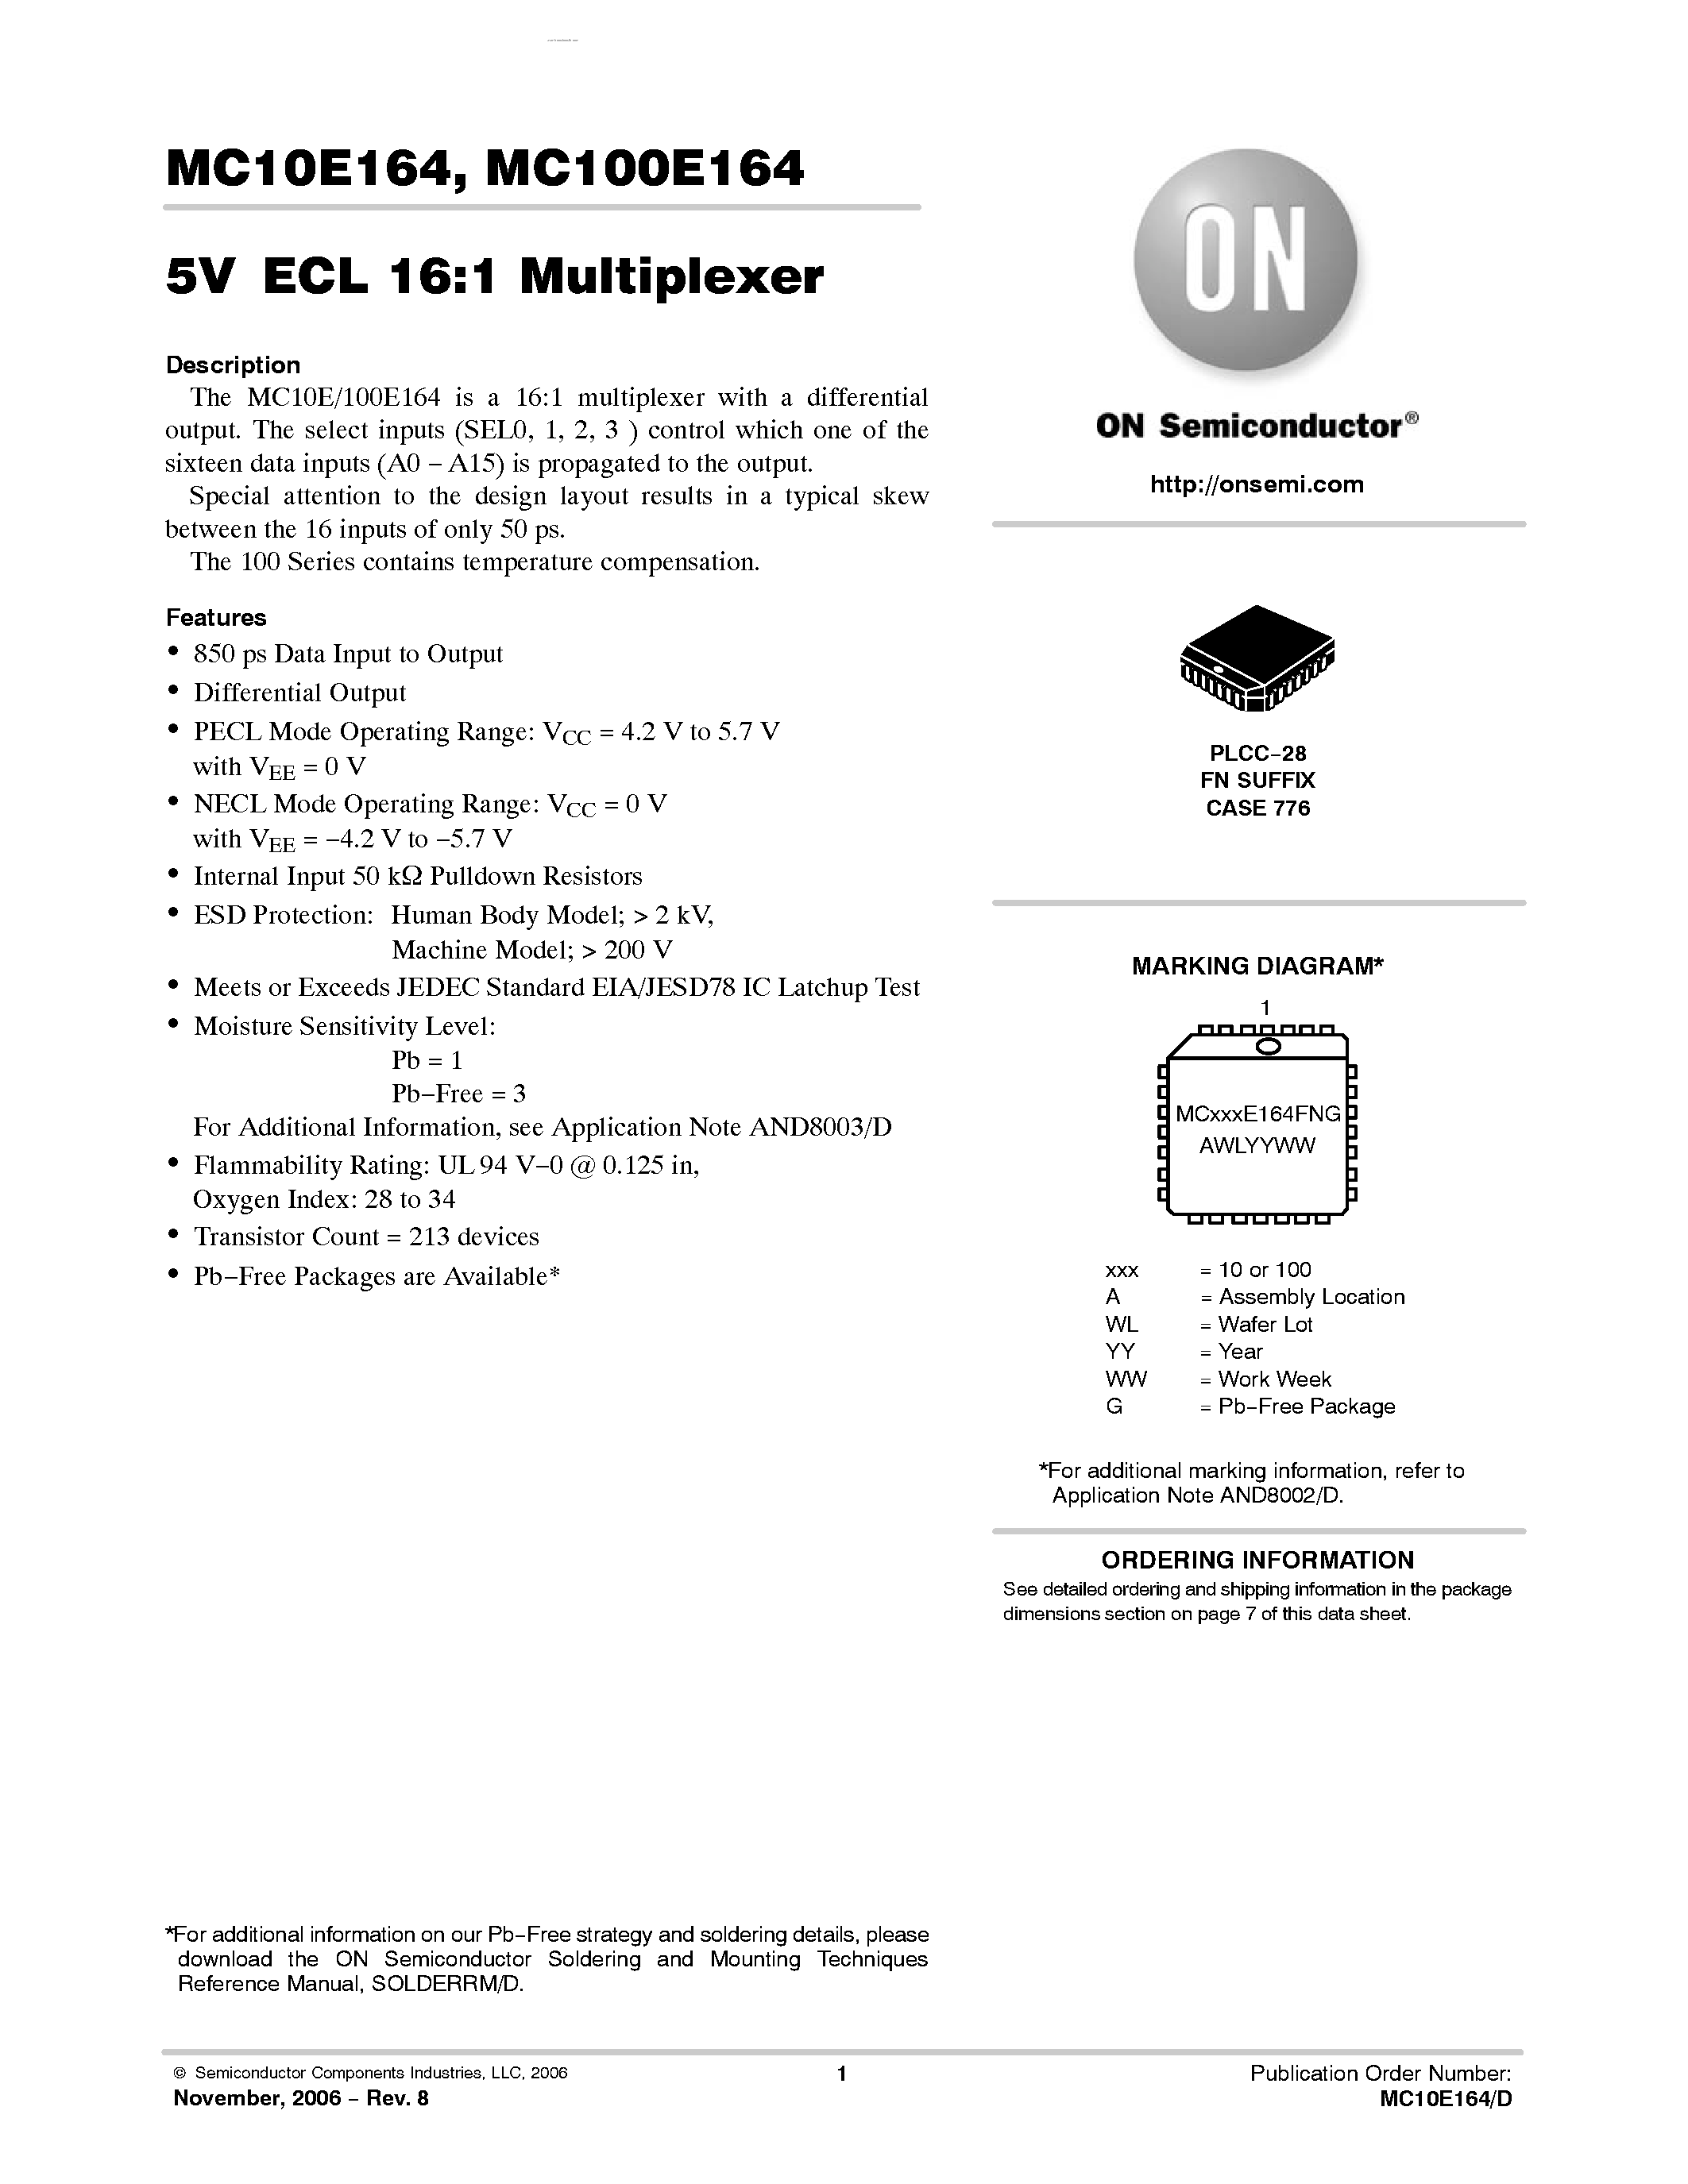 Datasheet MC100E164 - 16:1 MULTIPLEXER page 1